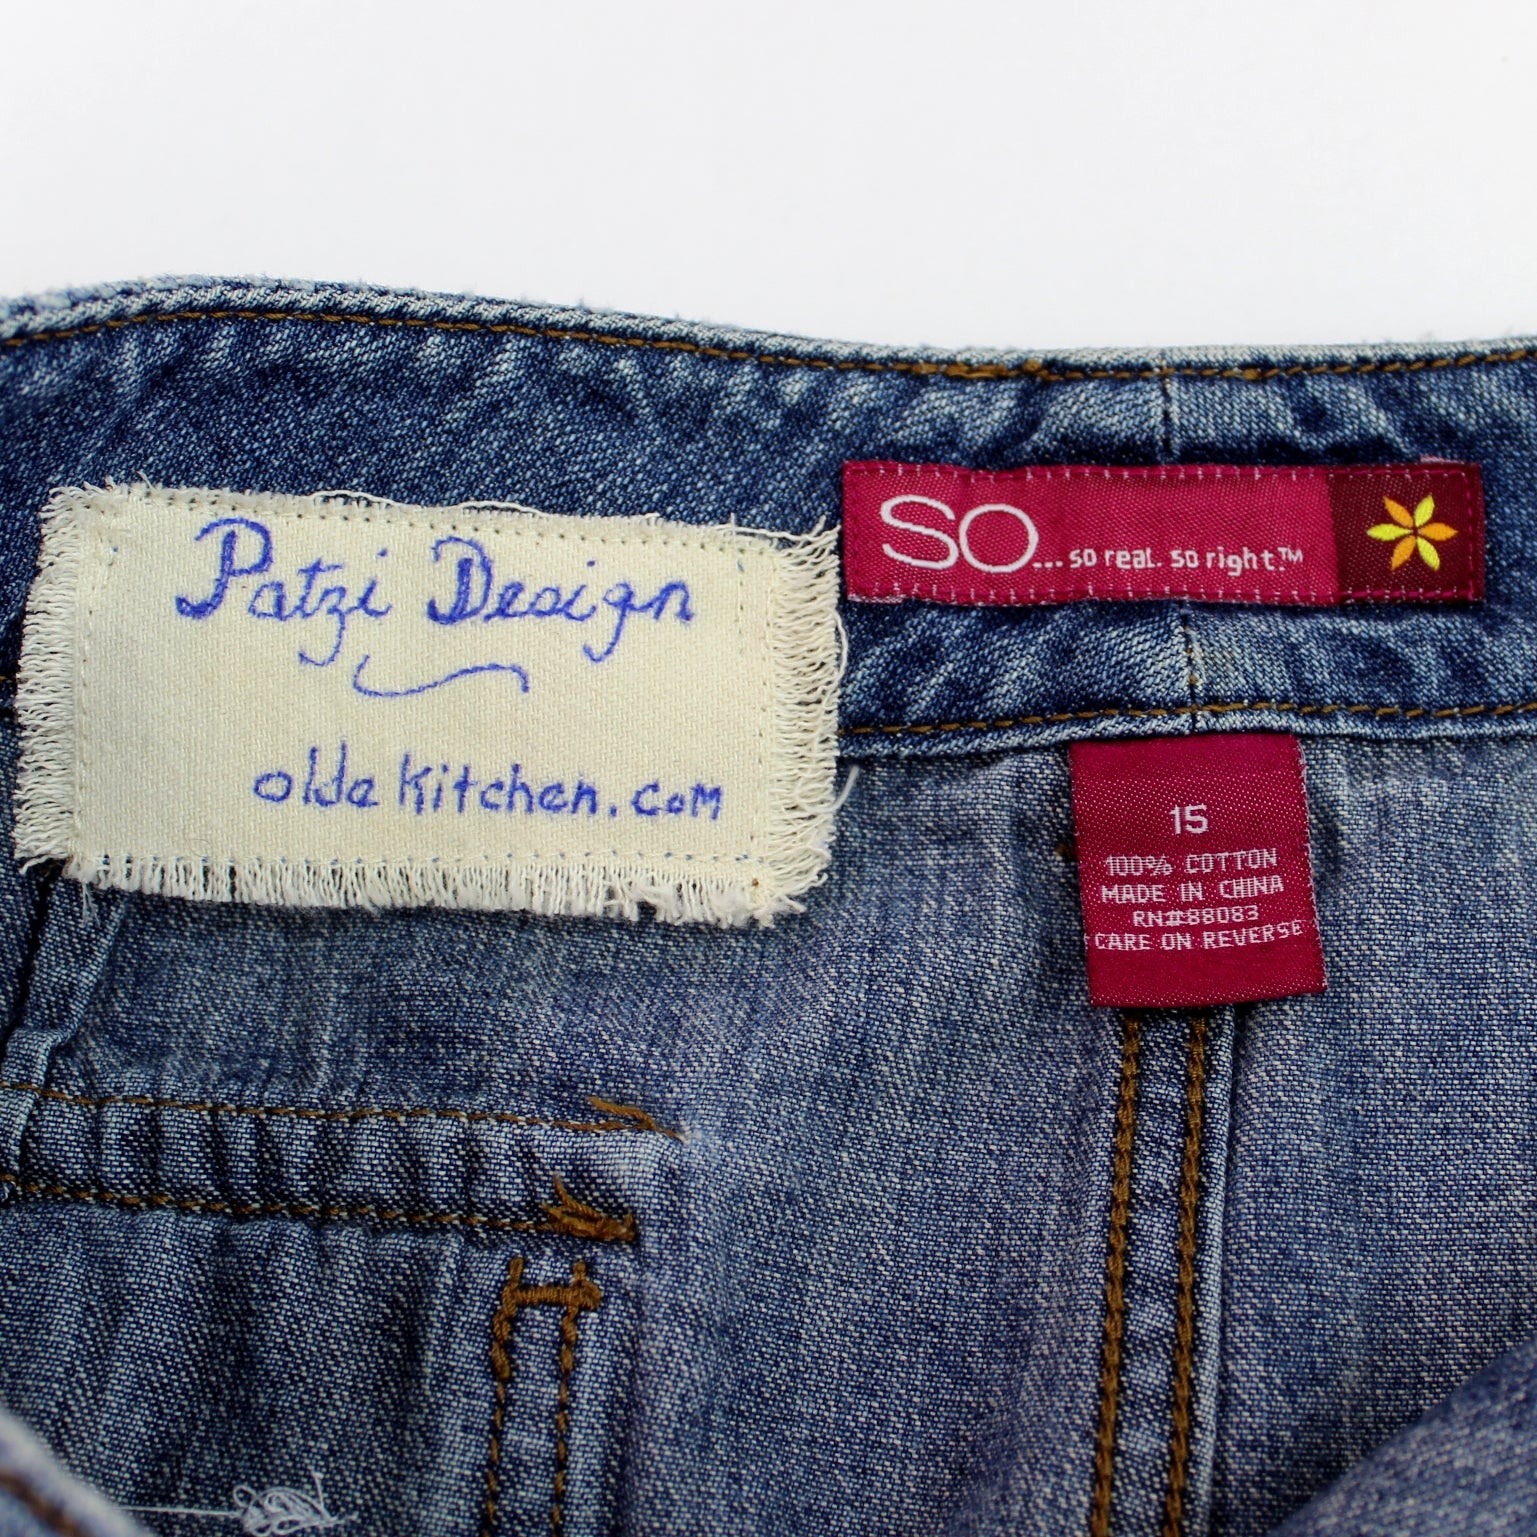 SO Denim Short Jeans 100% Cotton Patzi Design Embroidery Lace Size 15 SO tags patzi label